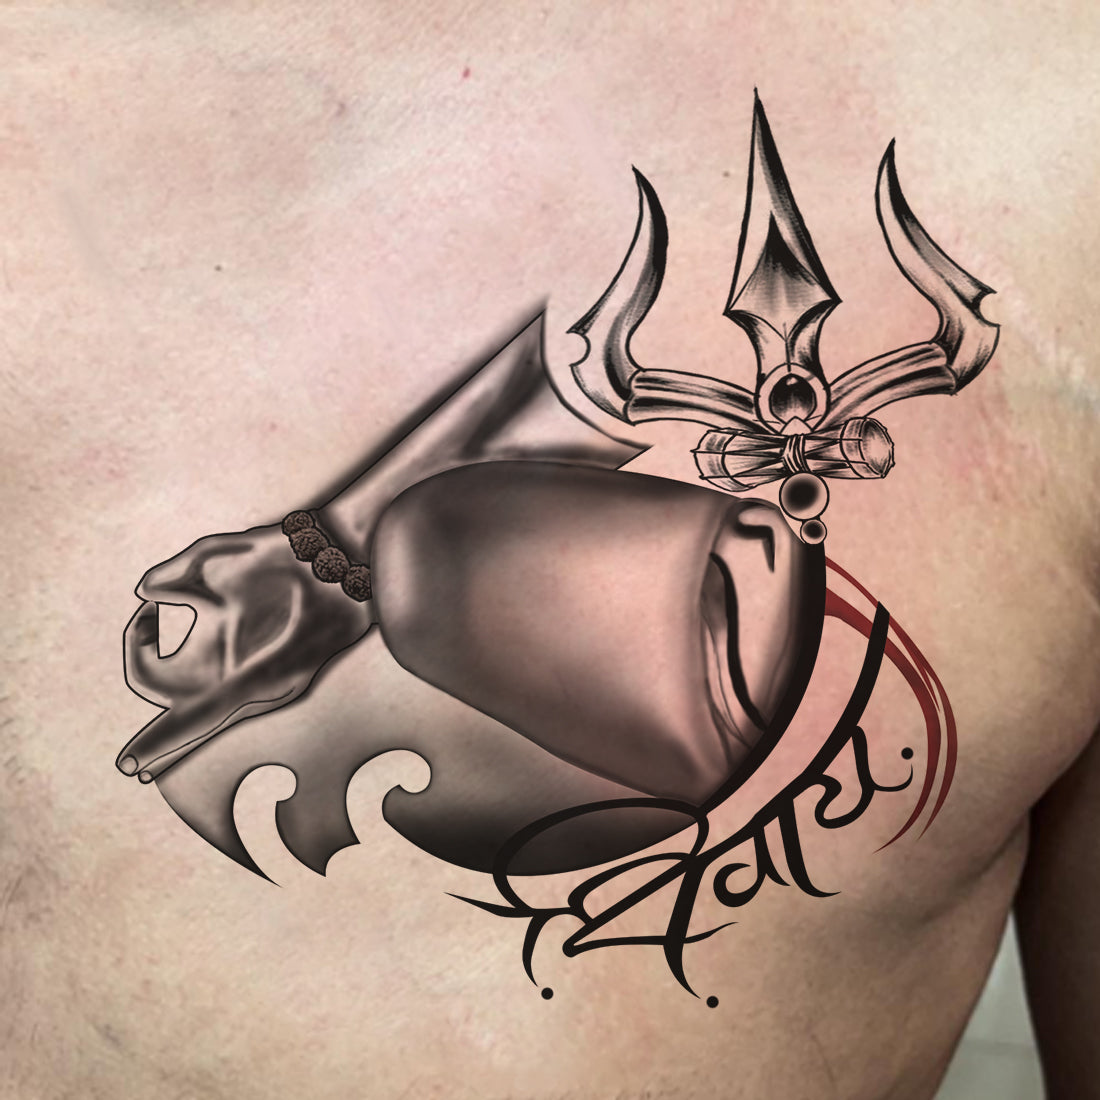 Ravan Tattoo Design Work by Sameer Patange Tattoo Artist from Mumbai  India  Tattoo artists Back tattoos for guys Tattoos